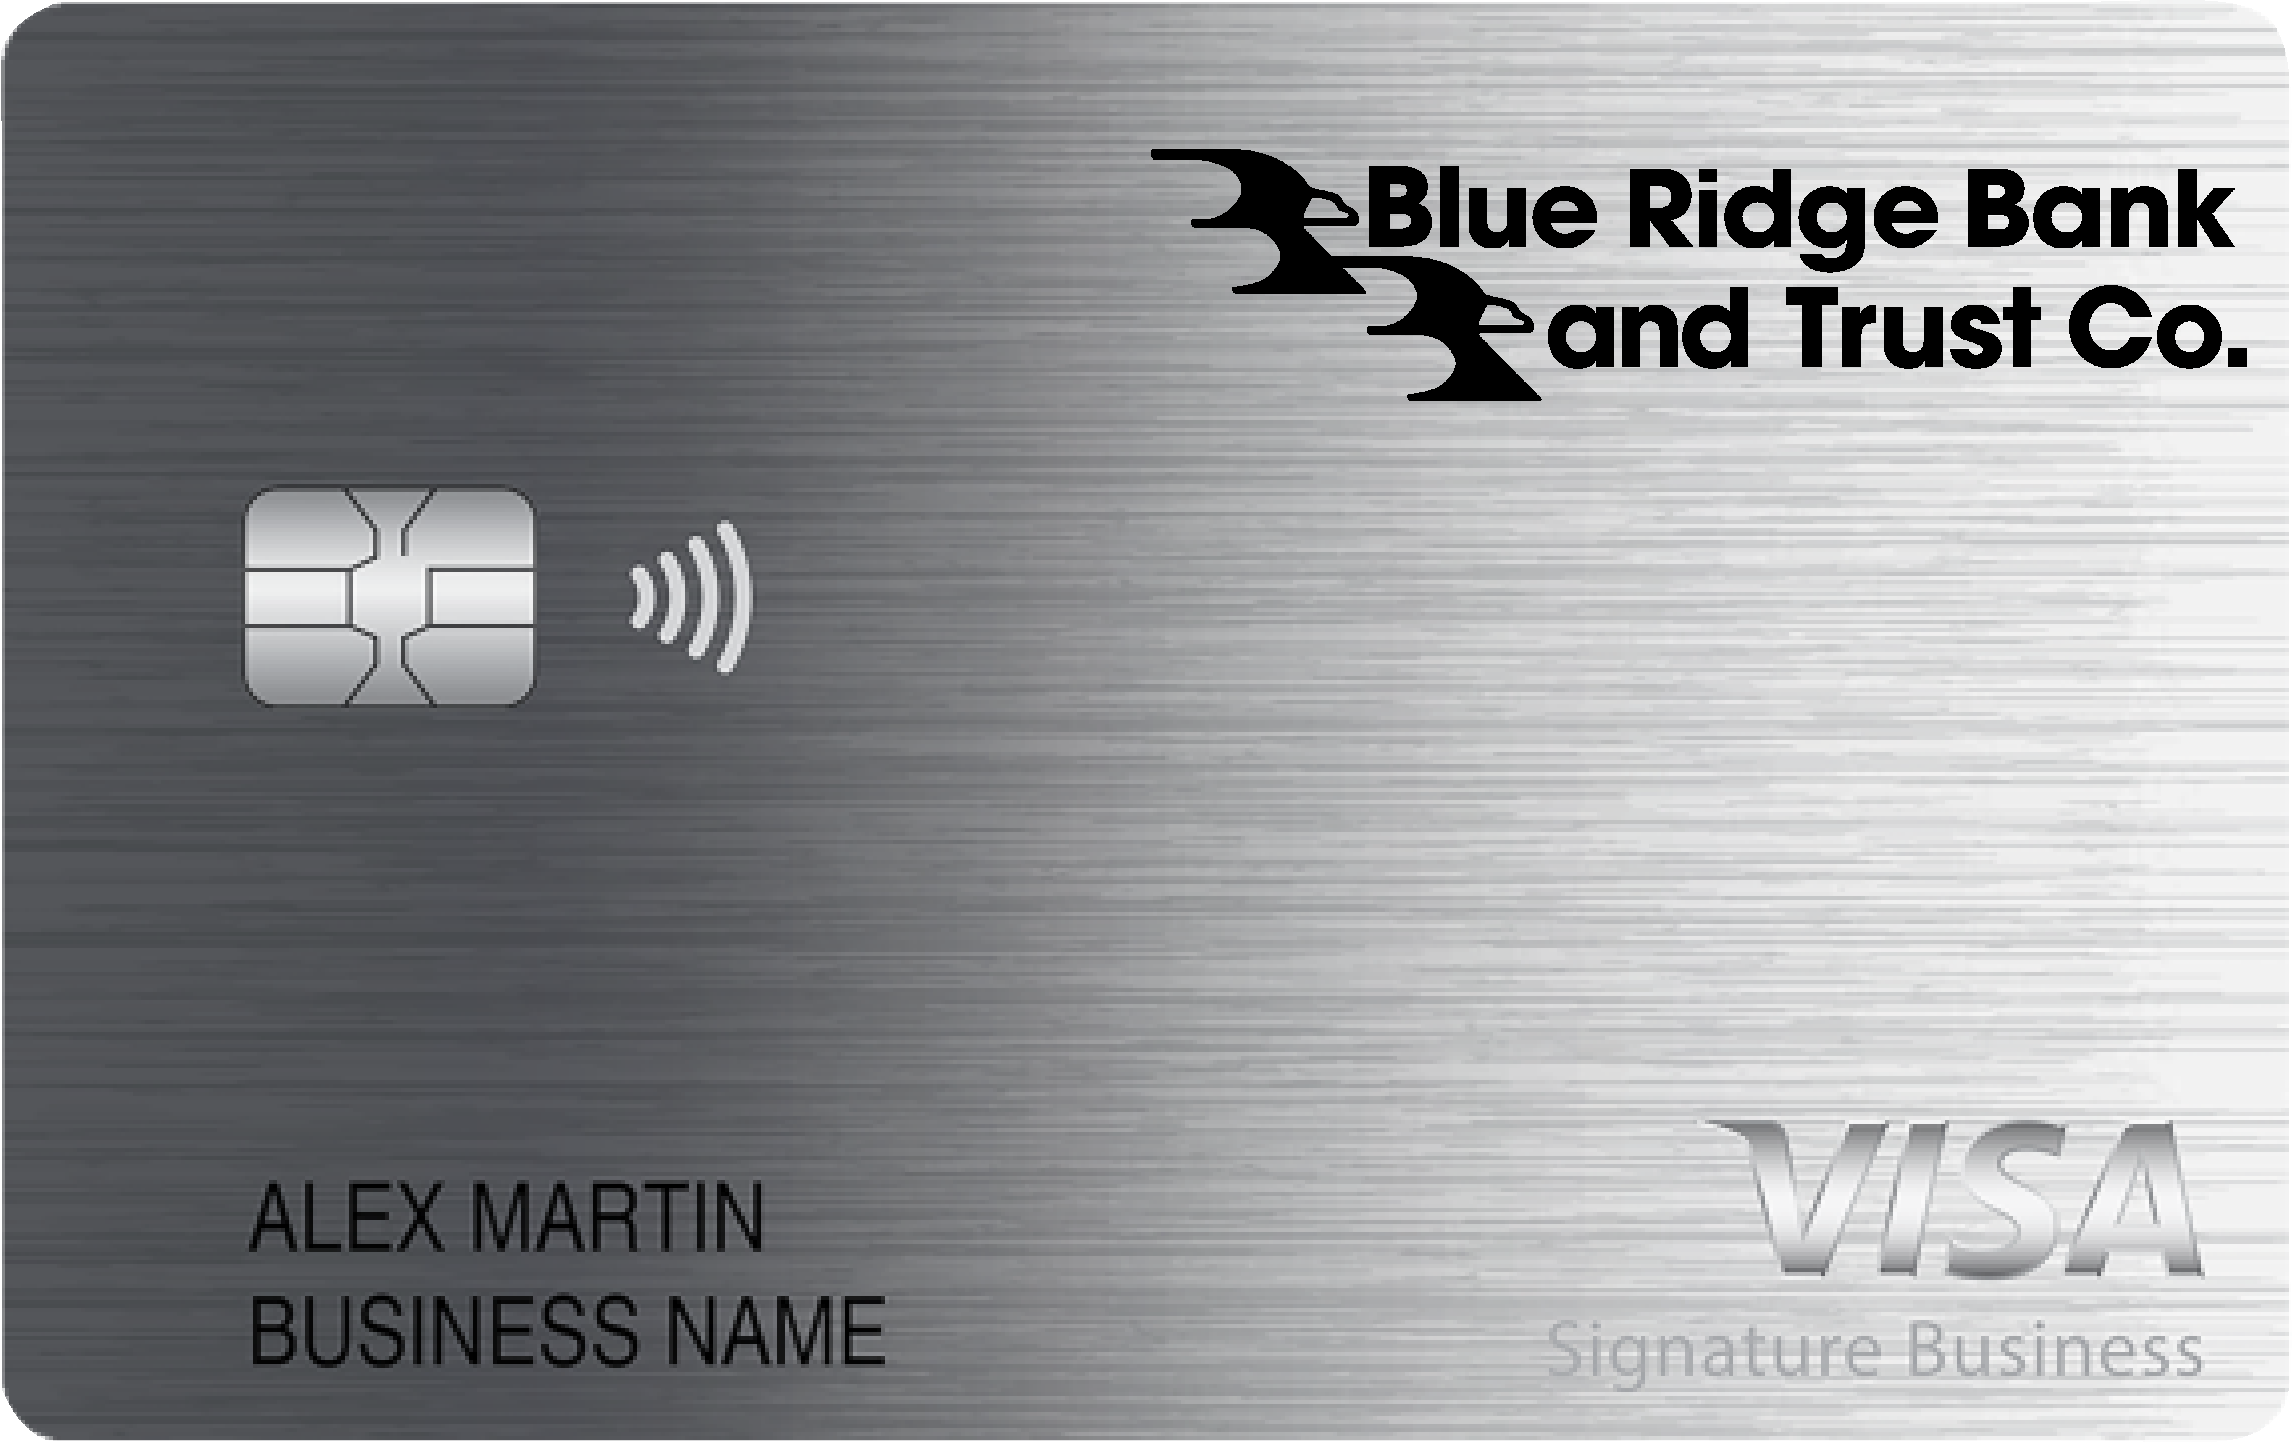 Blue Ridge Bank and Trust Co. Smart Business Rewards Card